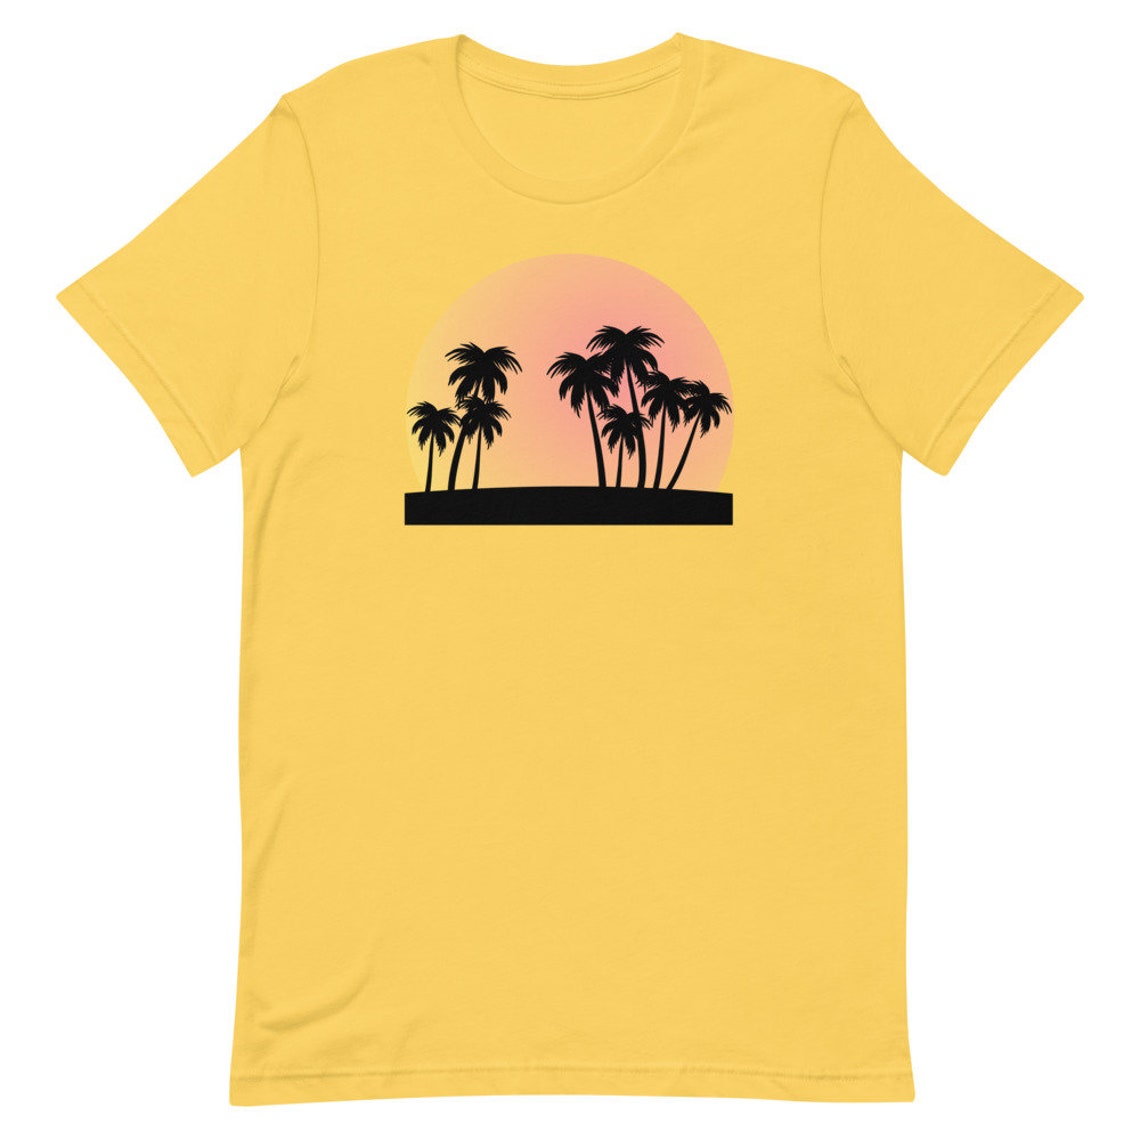 Sunset and palms T-shirt sunset shirt palm tree shirt | Etsy